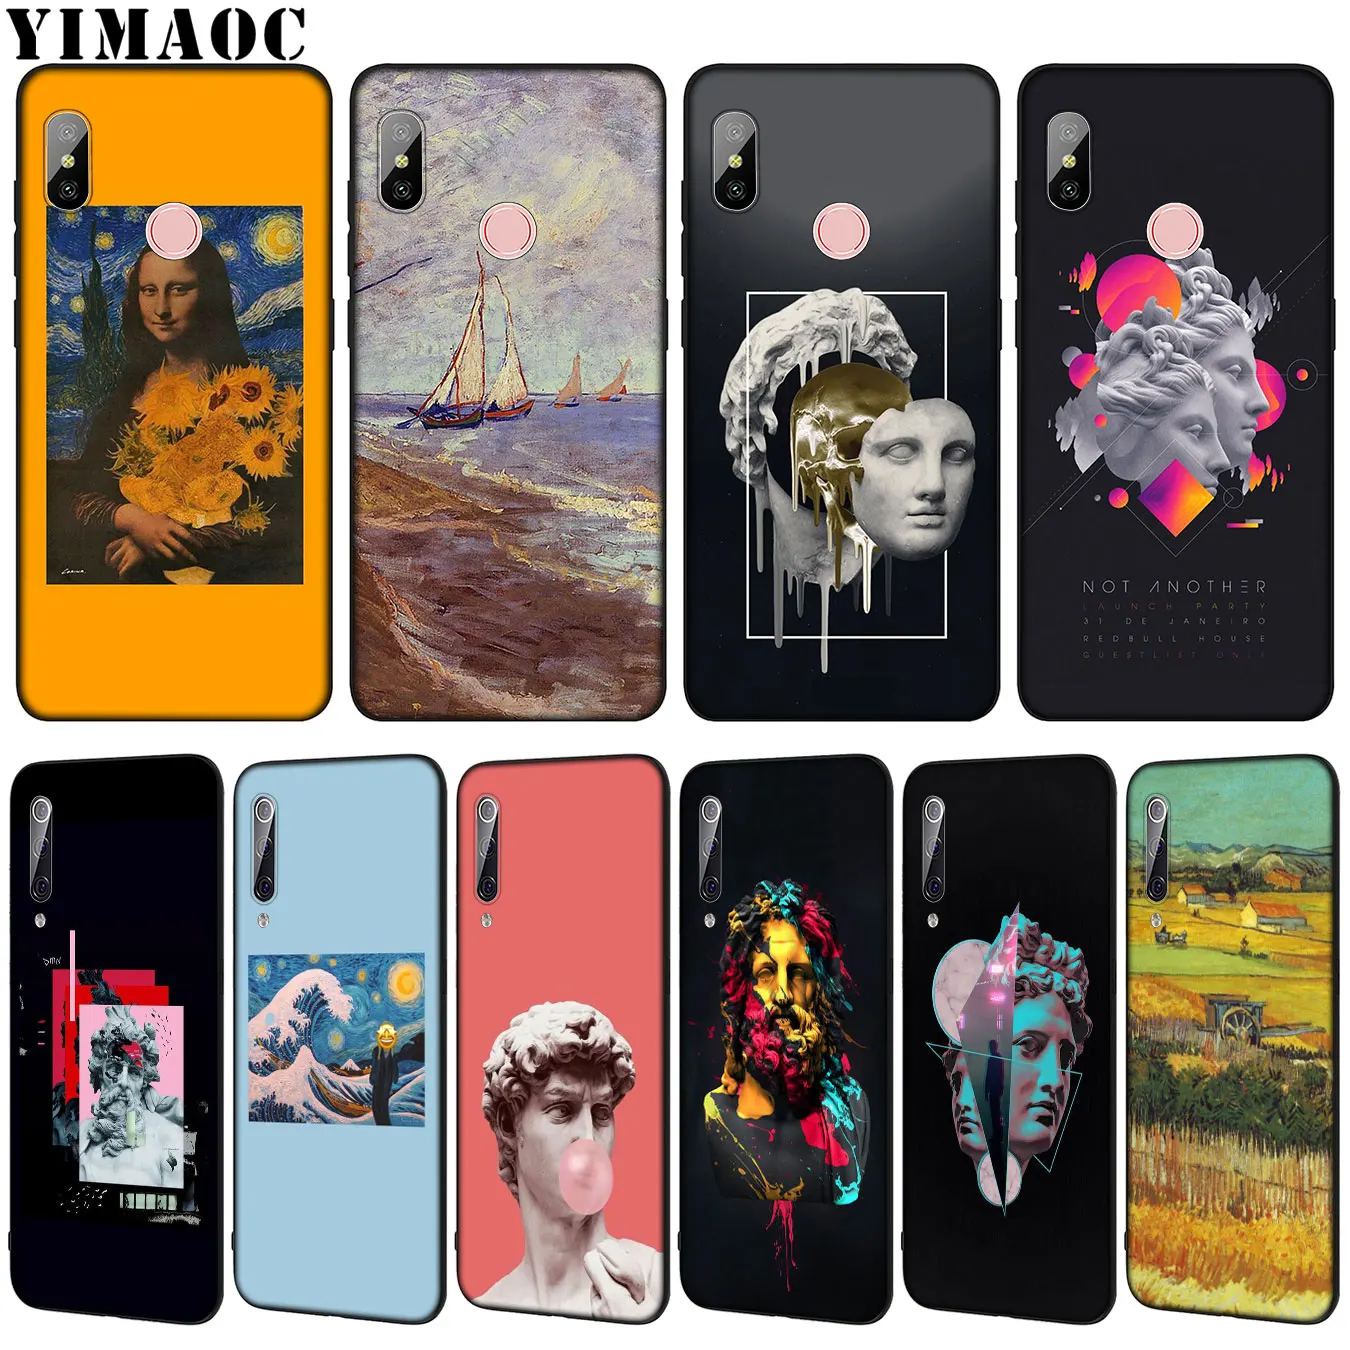 YIMAOC отличное искусство эстетическое Мона Лиза Давид Ван Гог мягкий чехол для Xiaomi mi 9 8 A2 Lite A1 6 6X 5X pocophone f1 MAX 3 mi 9 mi 8